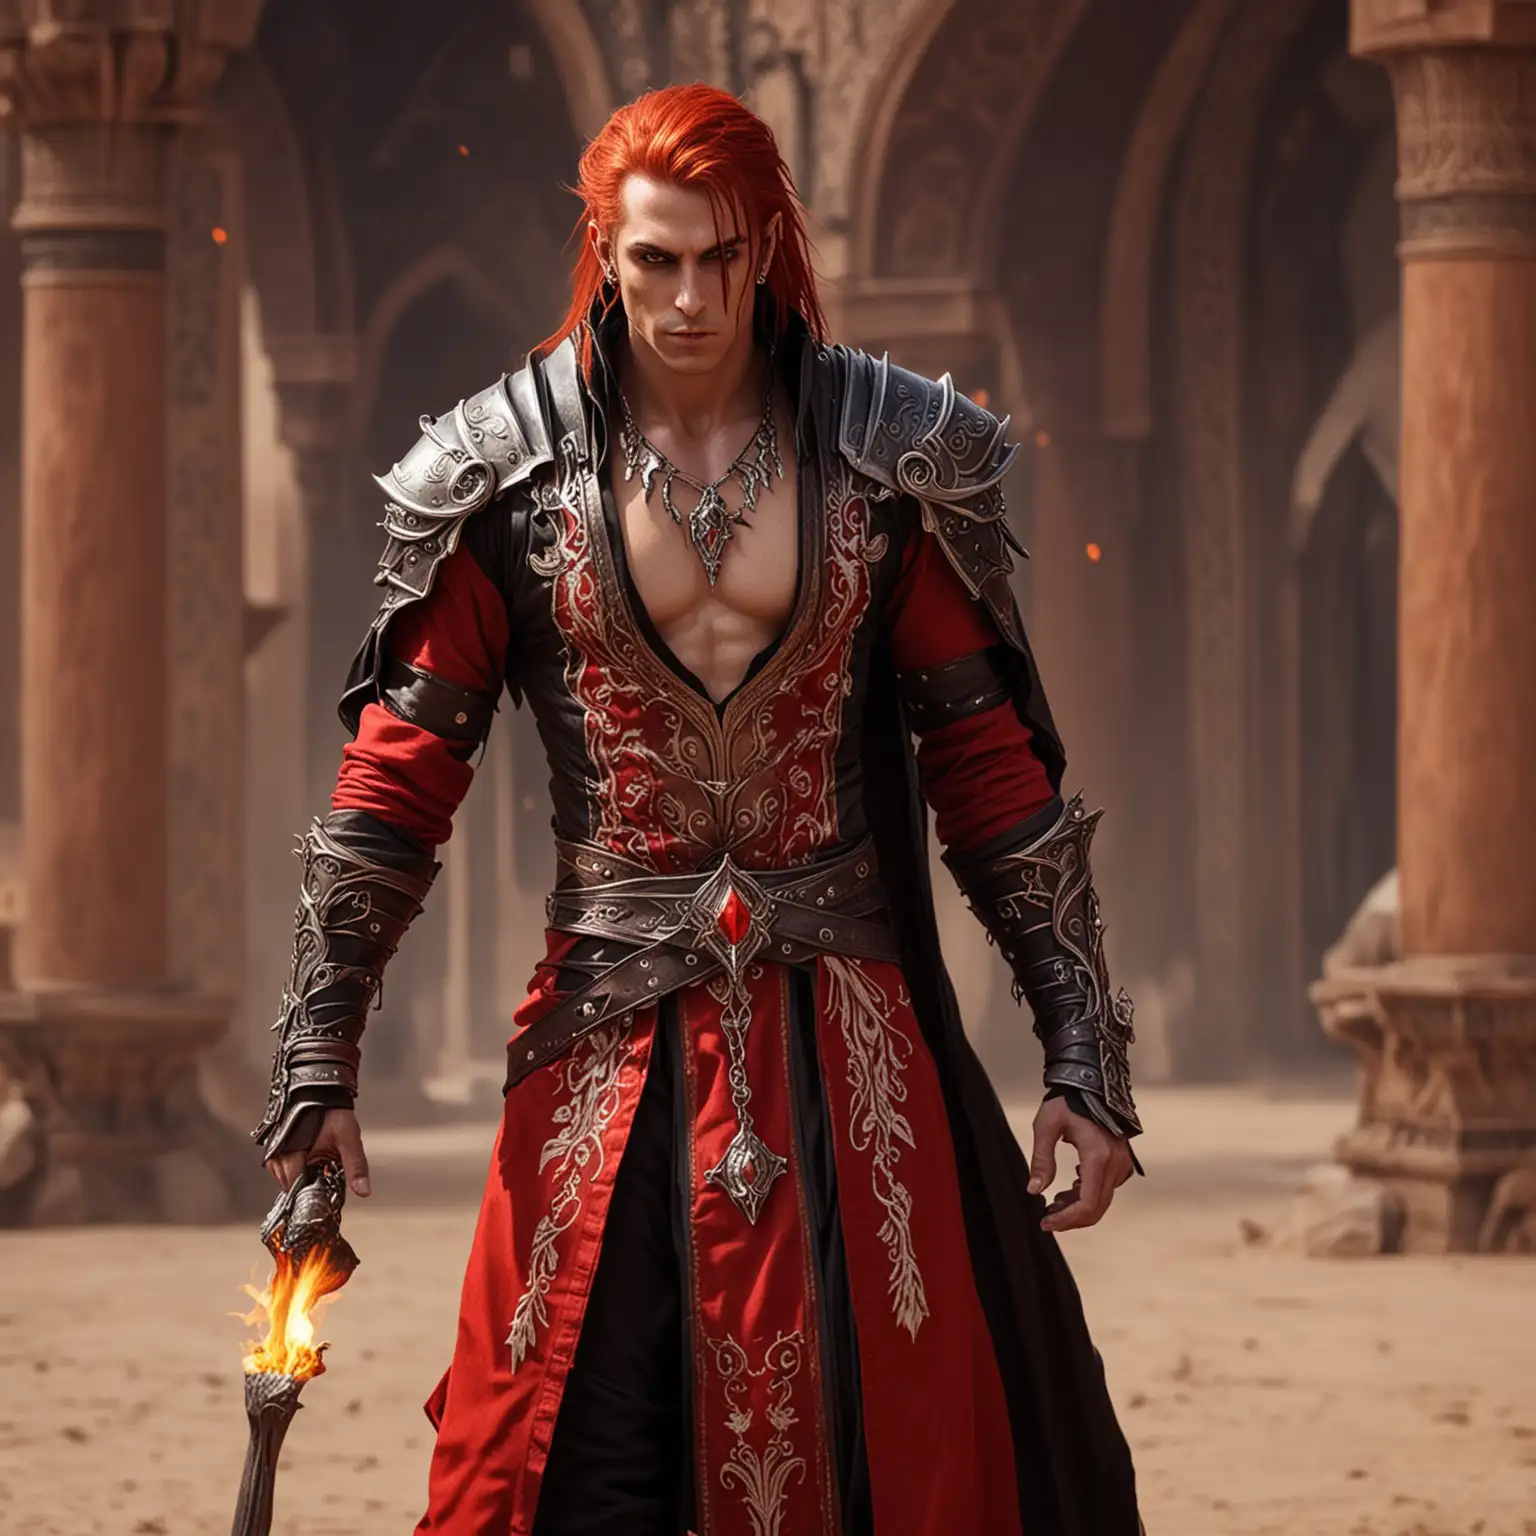 Noble Blood Elf Pyromancer in Regal Robes at Desert Palace